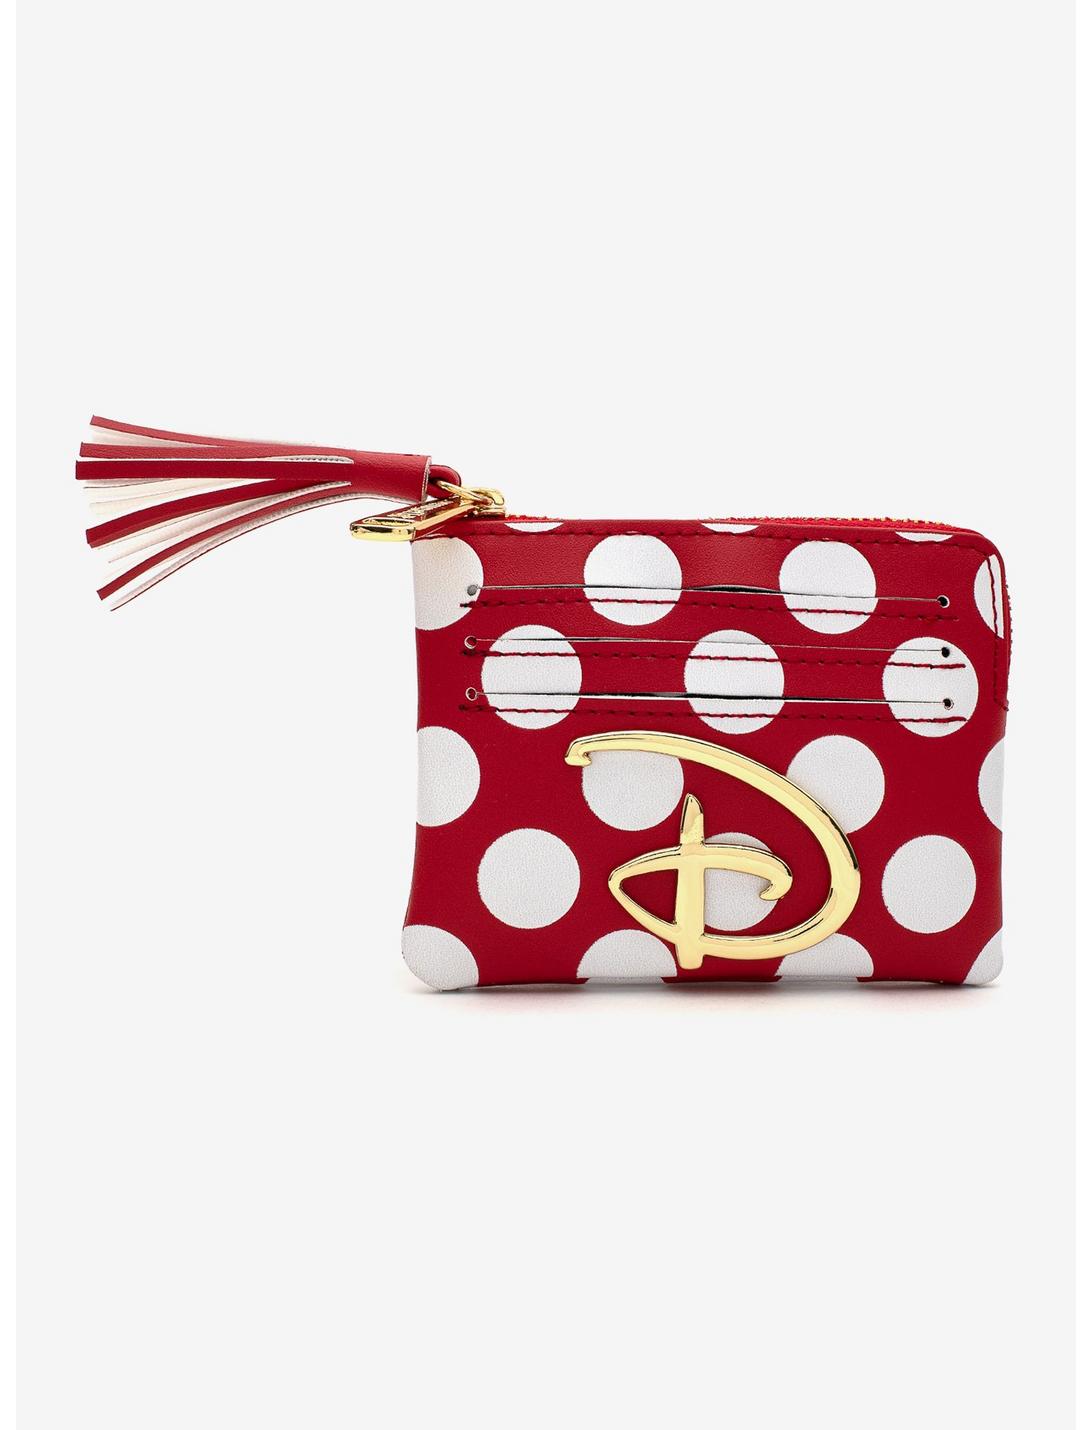 Loungefly Disney Red & White Polka Dot Cardholder, , hi-res